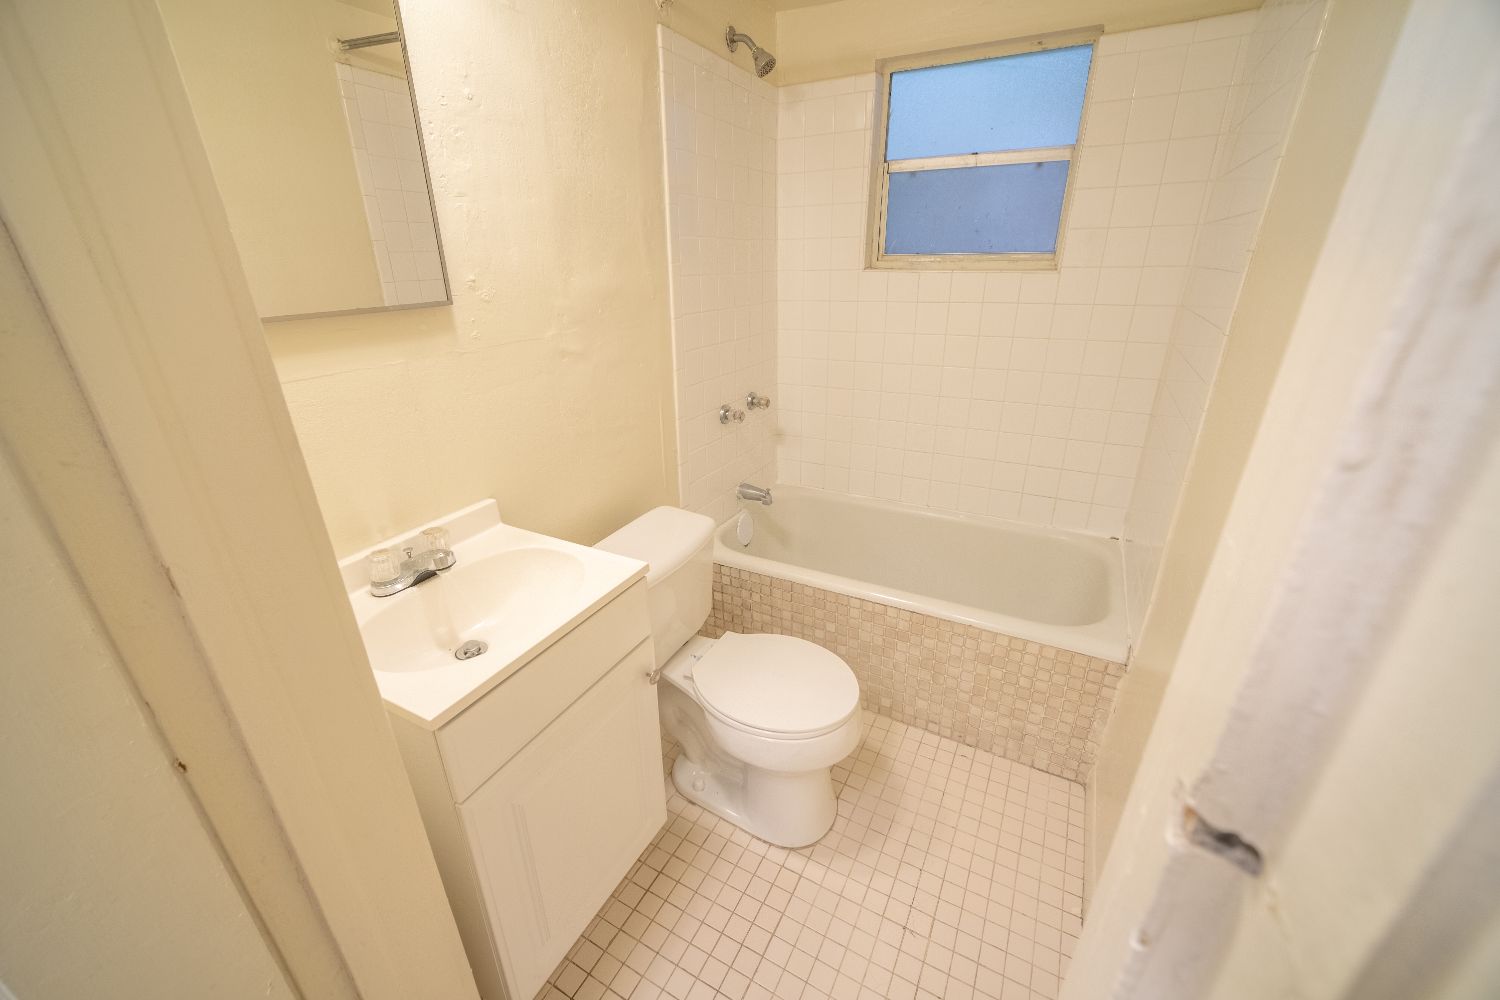 Shared bathroom with tile flooring